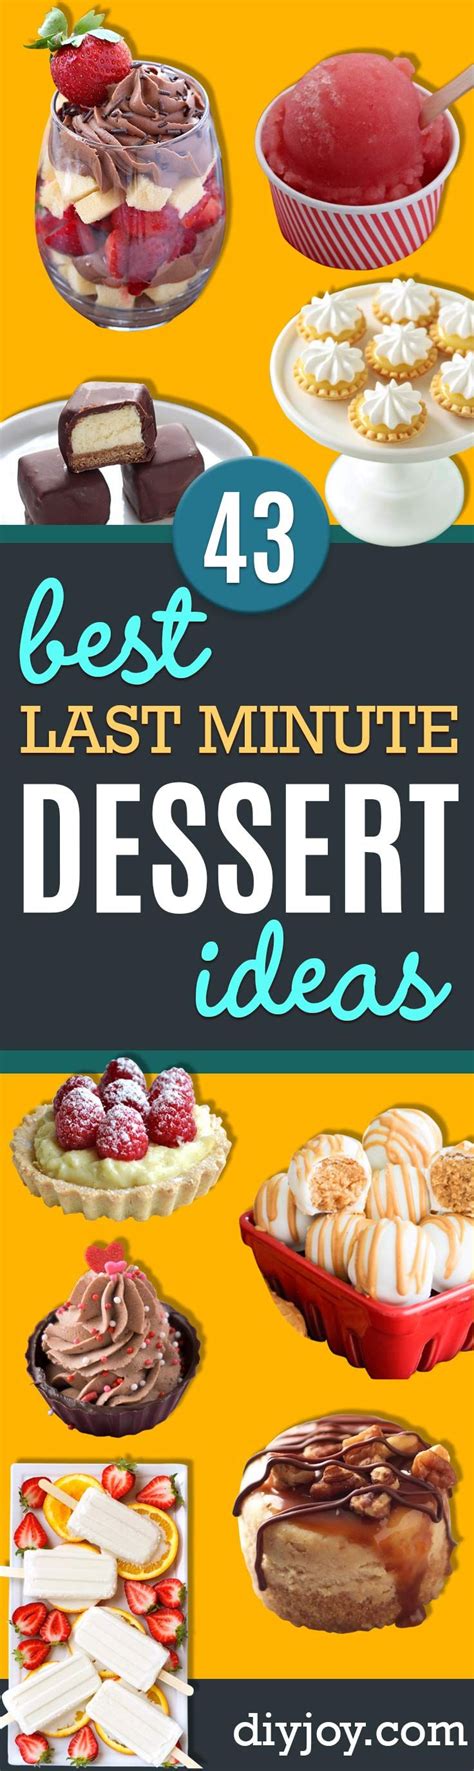 43 Last Minute Dessert Ideas Dessert Recipes Thanksgiving Food